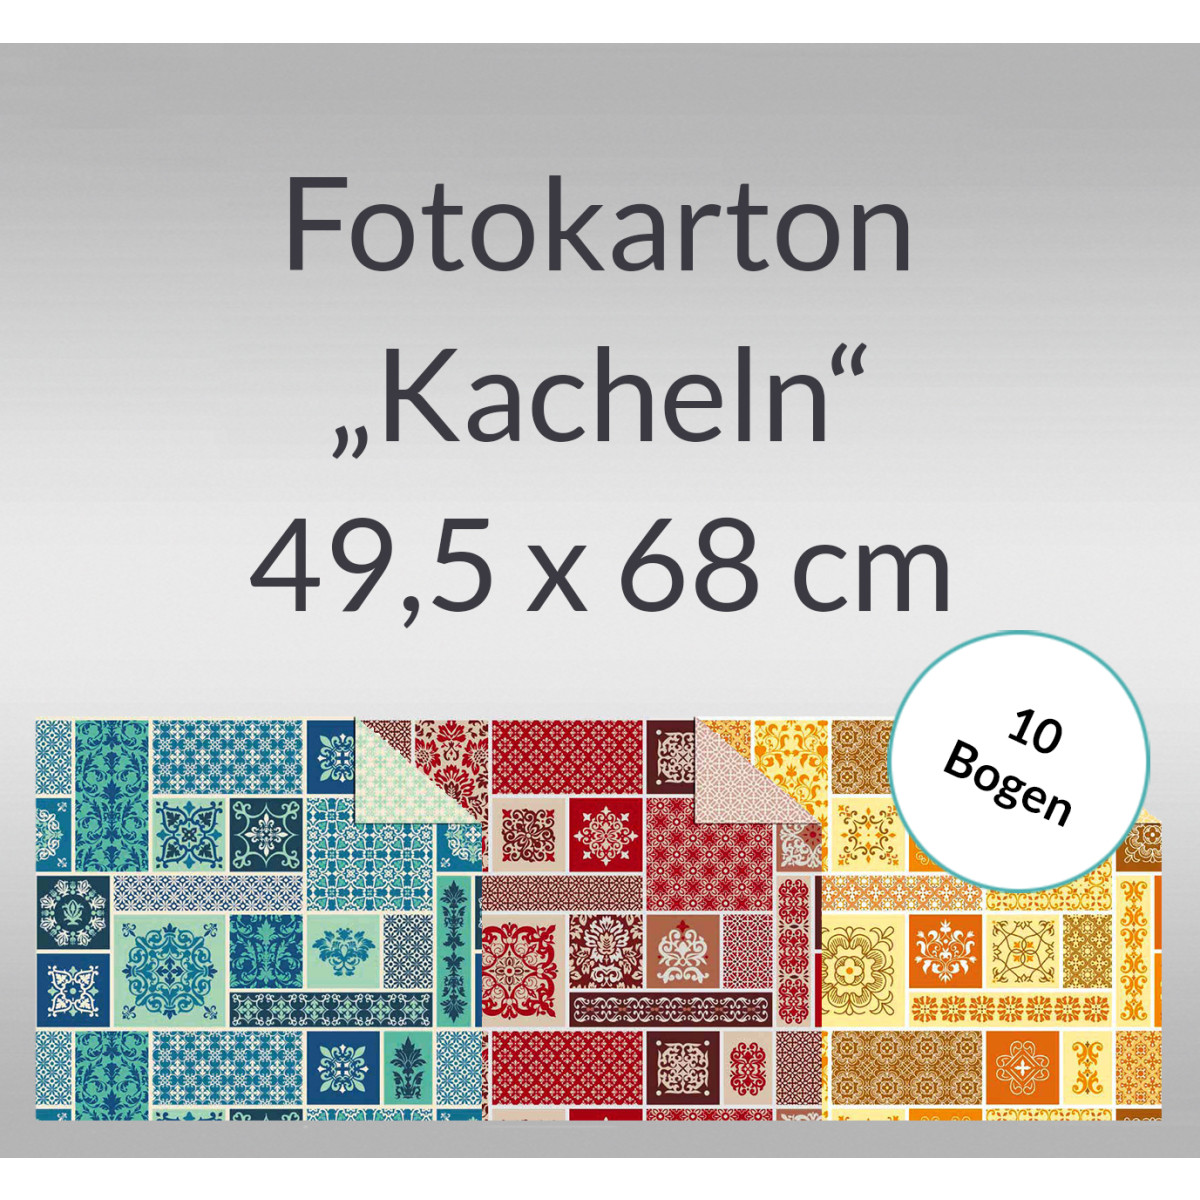 Fotokarton "Kacheln" 49,5 x 68 cm - 10 Bogen